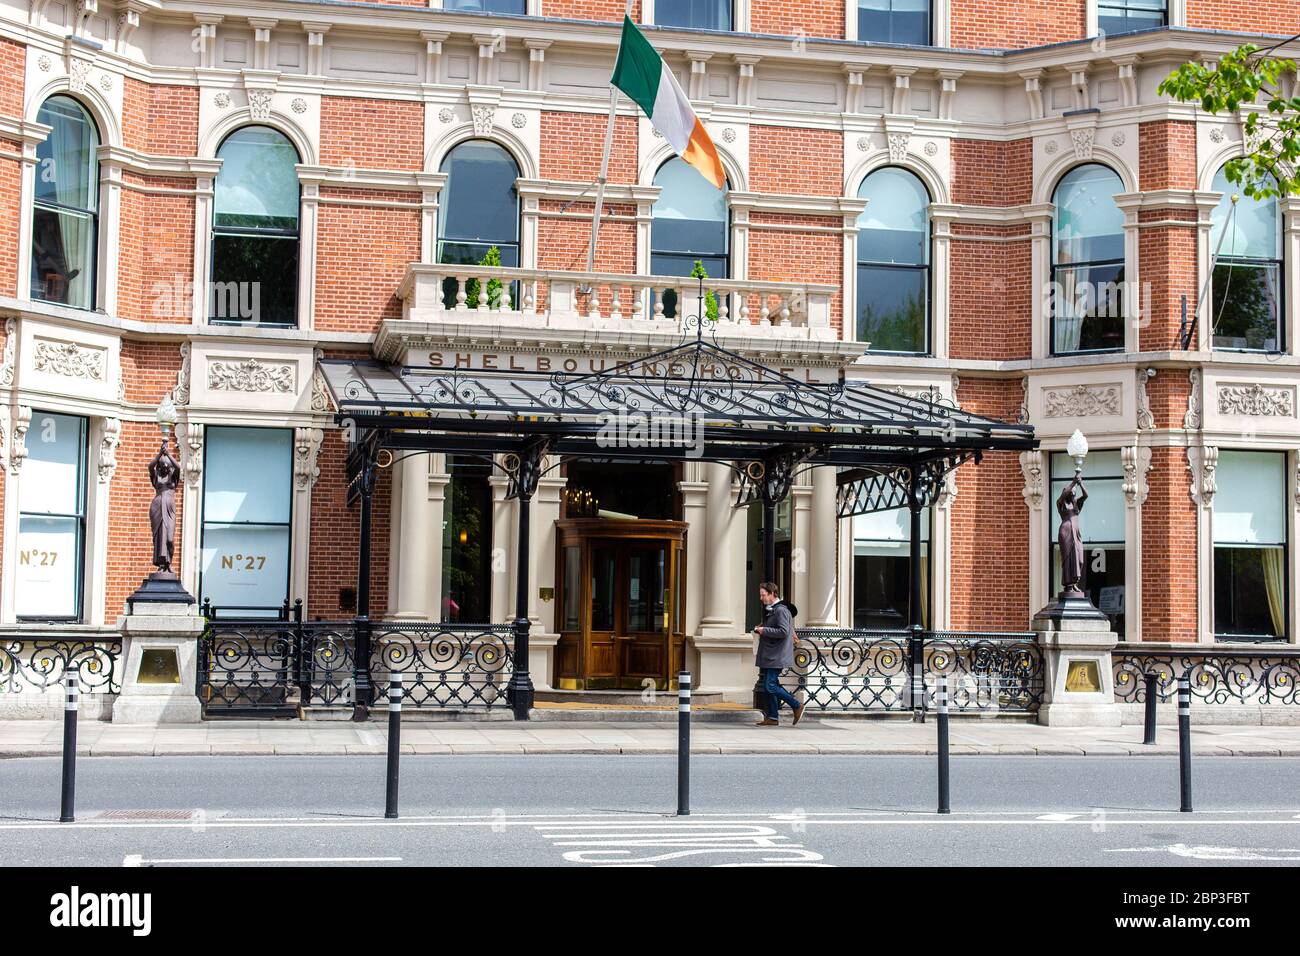 Fassade des Shelbourne Hotels auf St. Stephans Green, Dublin City Centre während Covid-19 Pandemiesperre. Dublin Irland, 2020 Stockfoto